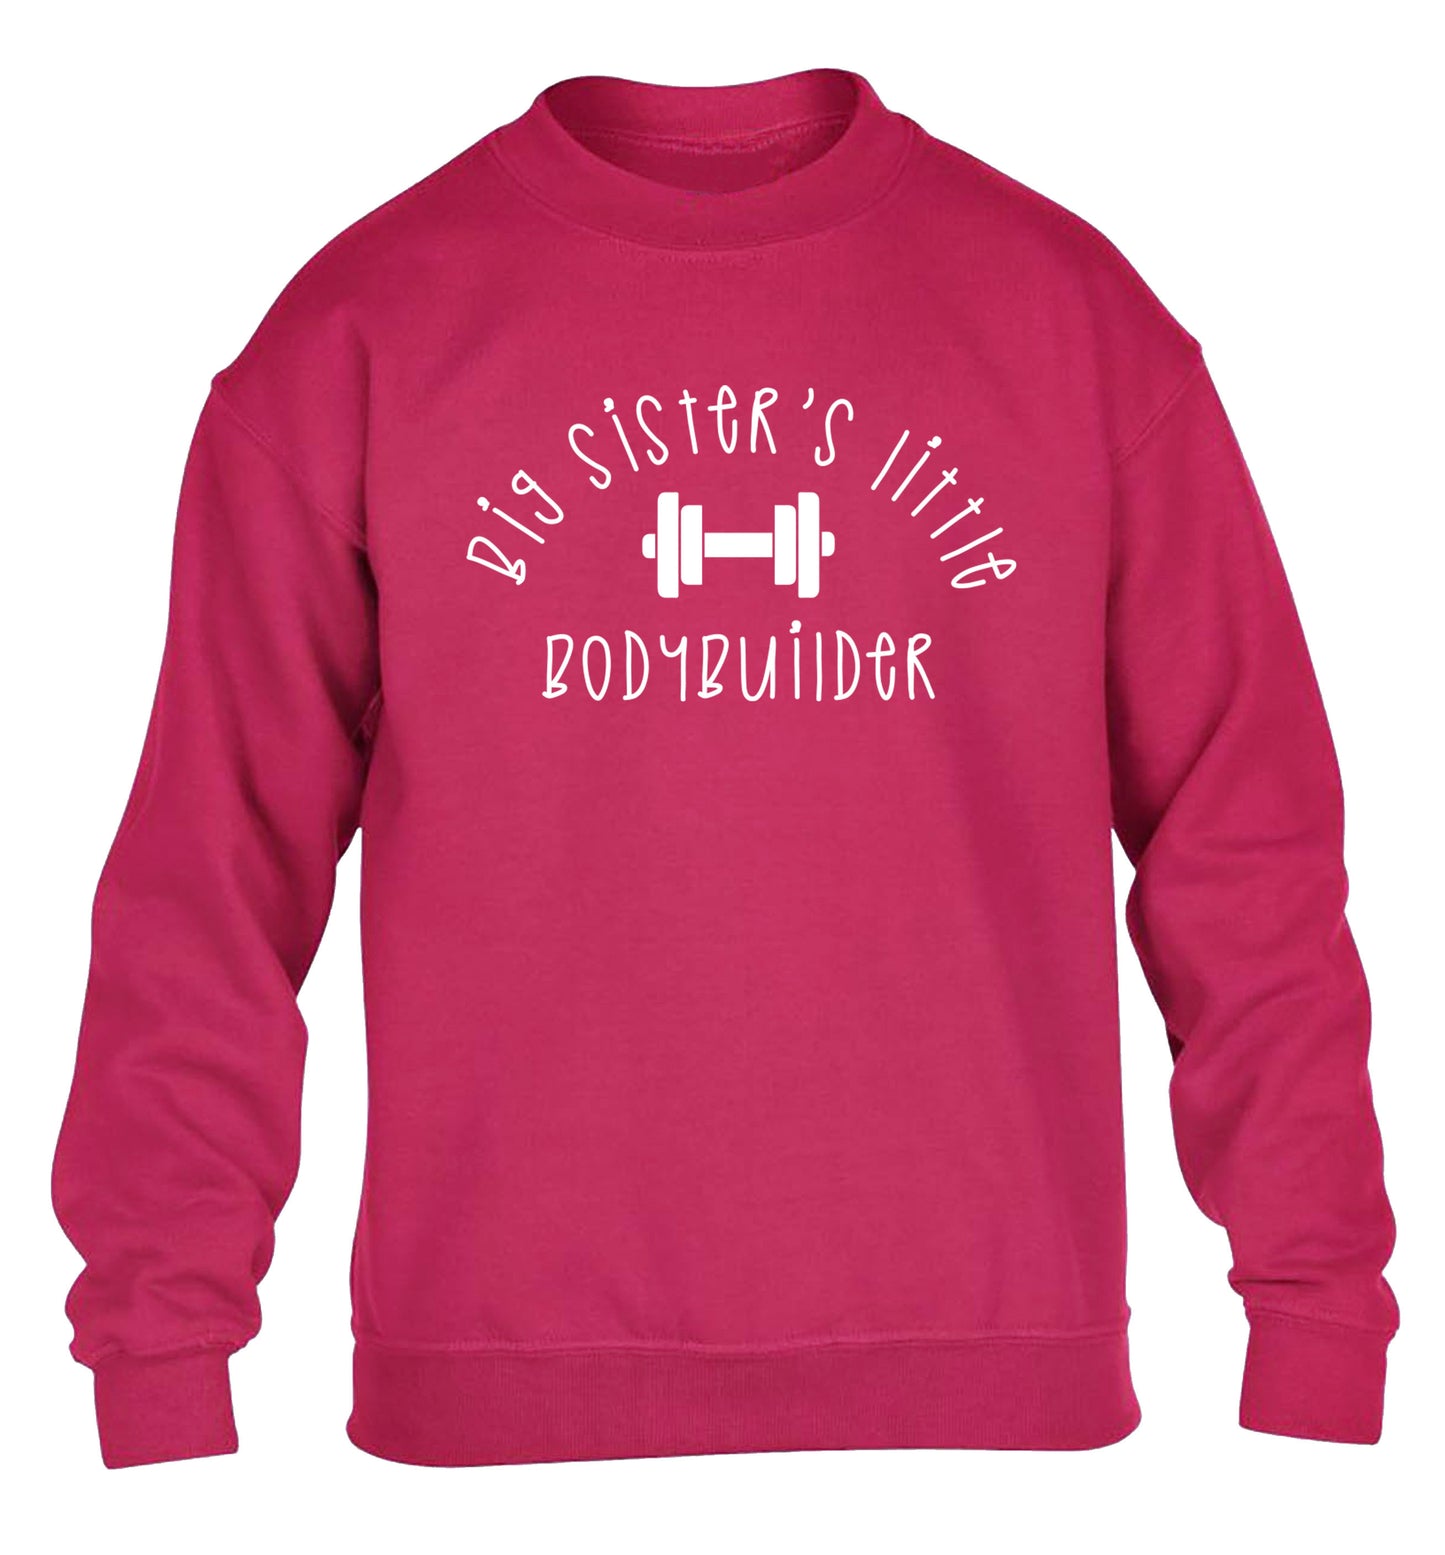 Big sister's little bodybuilder children's pink sweater 12-14 Years